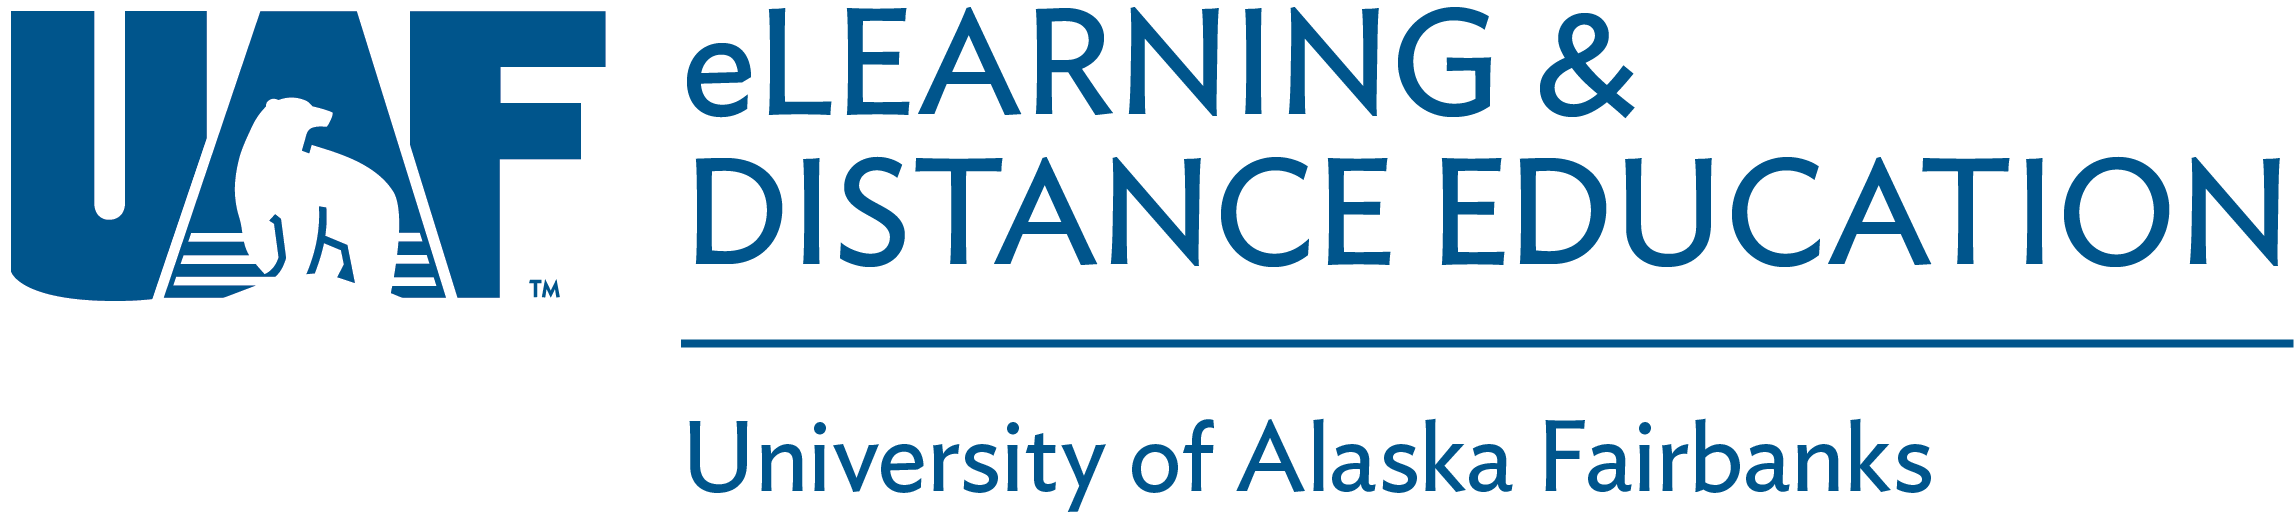 Uaf Elearning & Distance Education - Logoart Sterling Silver W/gp University Of Alaska Fairbanks (2588x788)